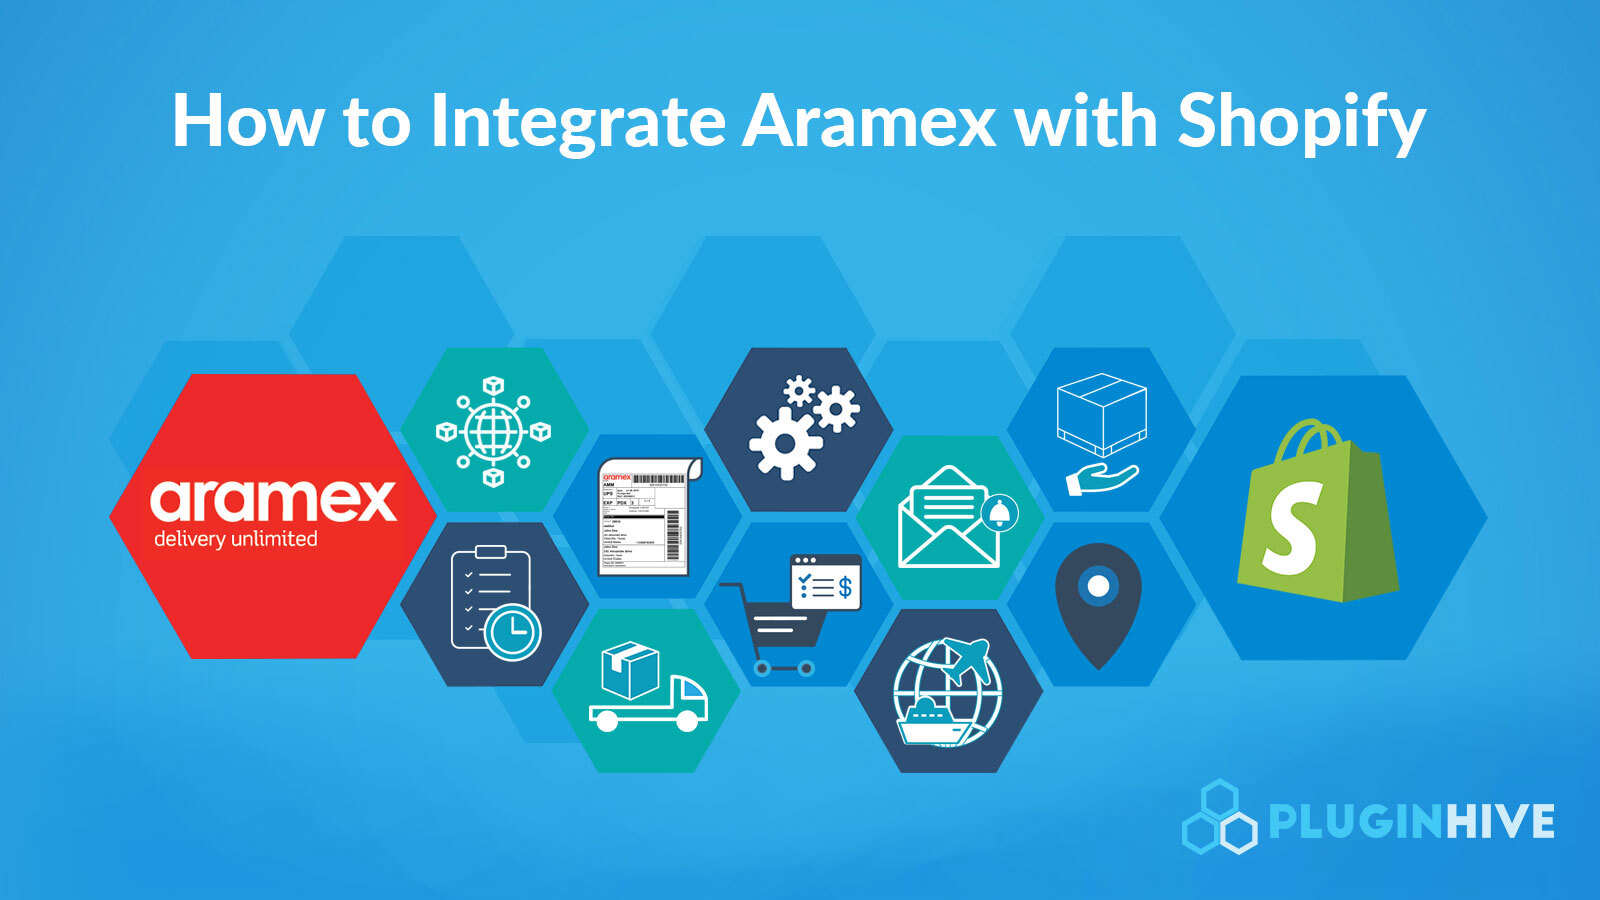 aramex-shopify-integration